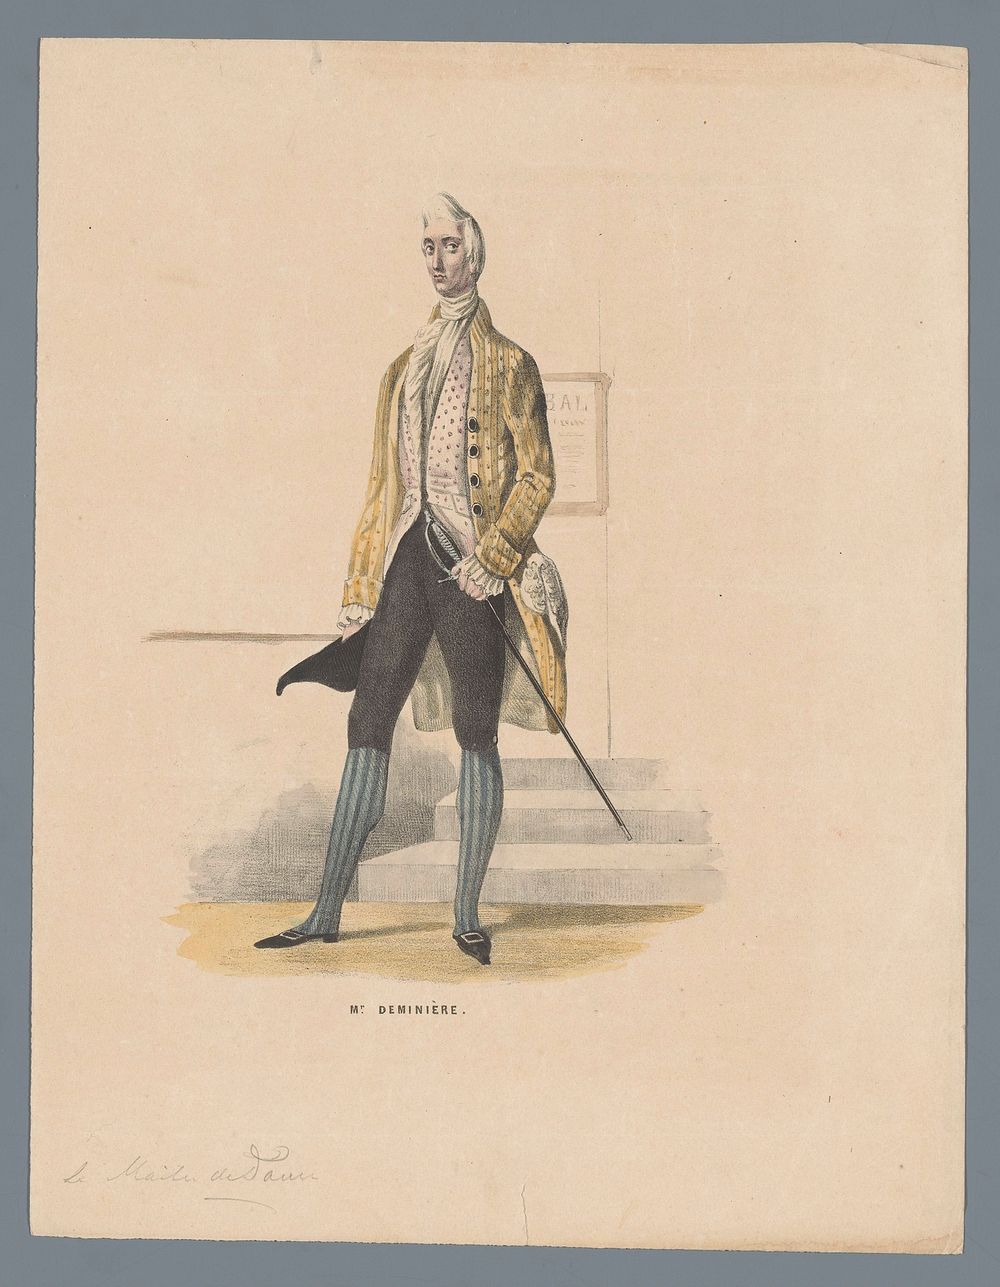 Mr. Deminière (1840 - 1850) by Elias Spanier